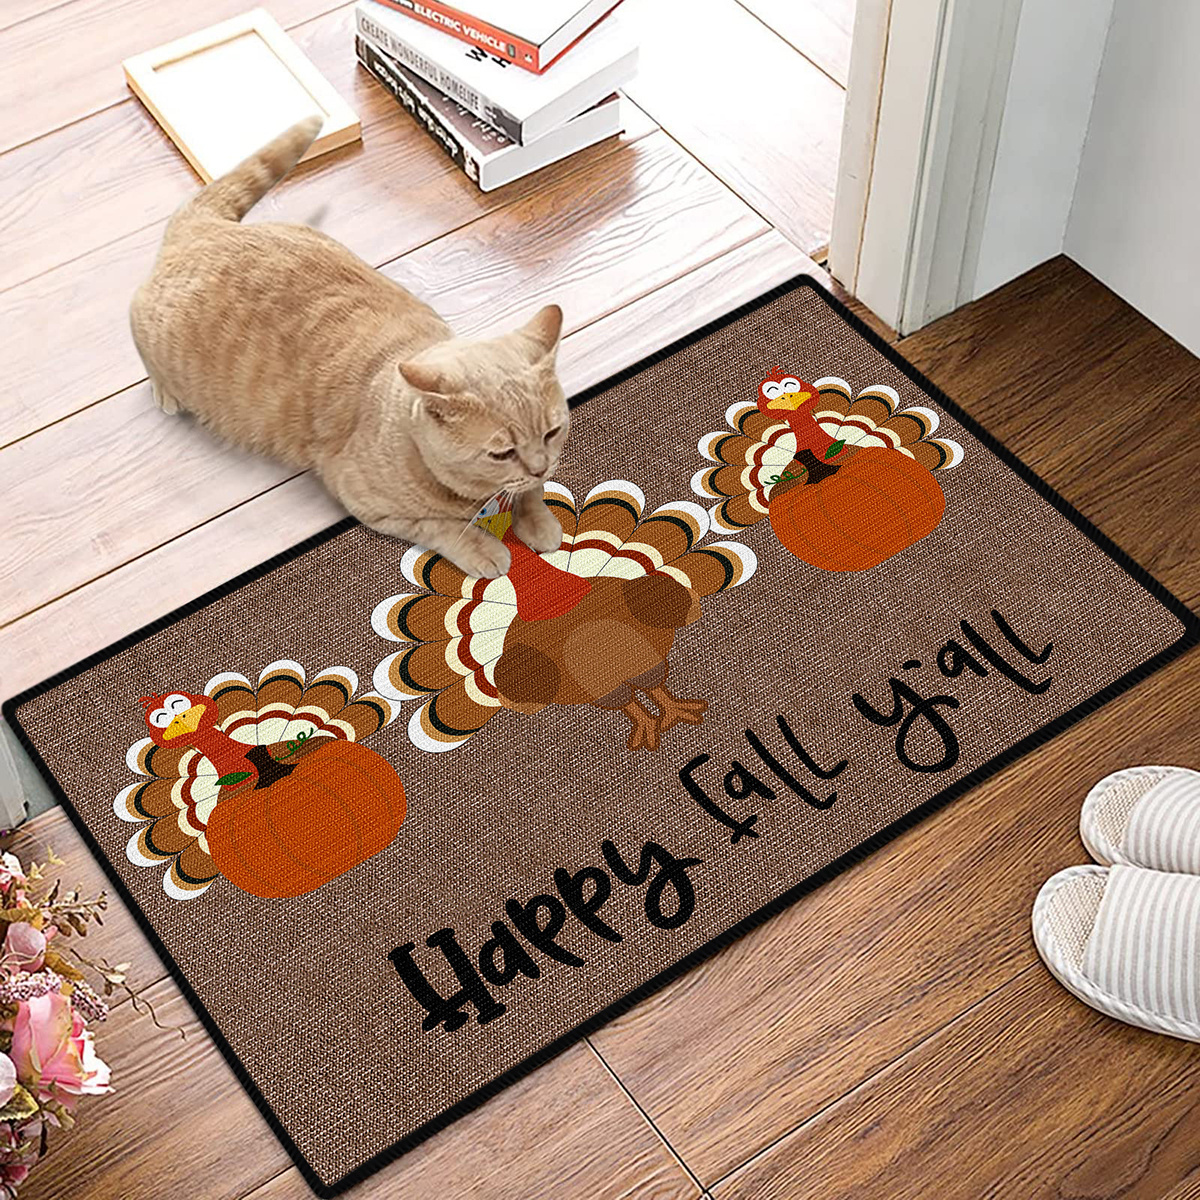 happy Fall Y'all Cute Turkey Door Mat, Indoor Mat, Creative